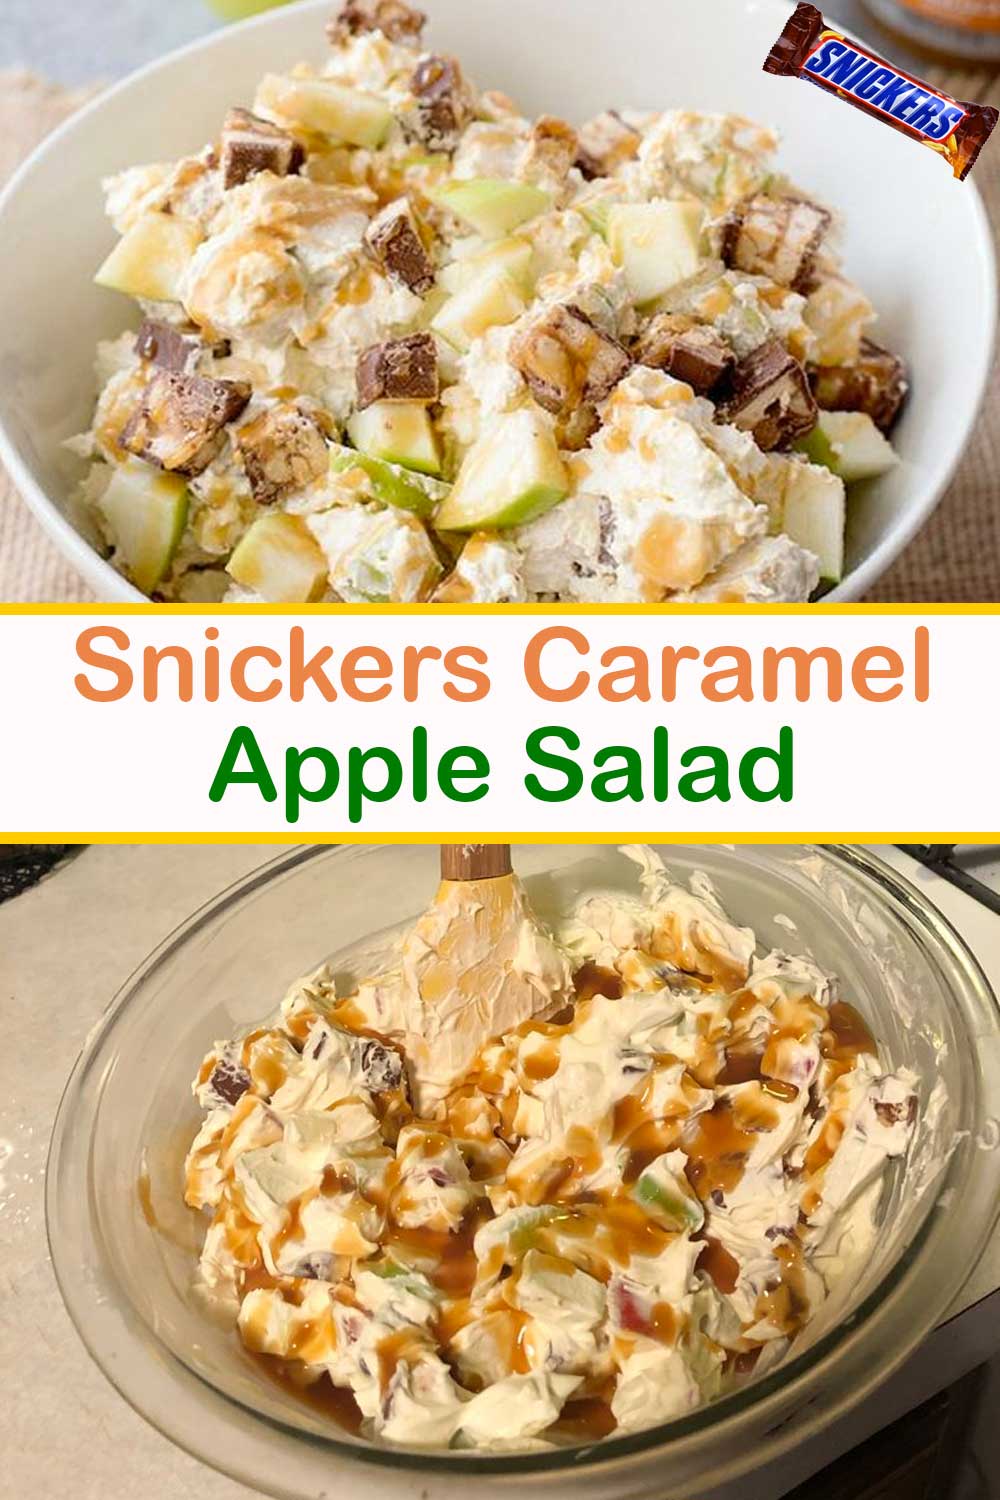 Snickers Caramel Apple Salad